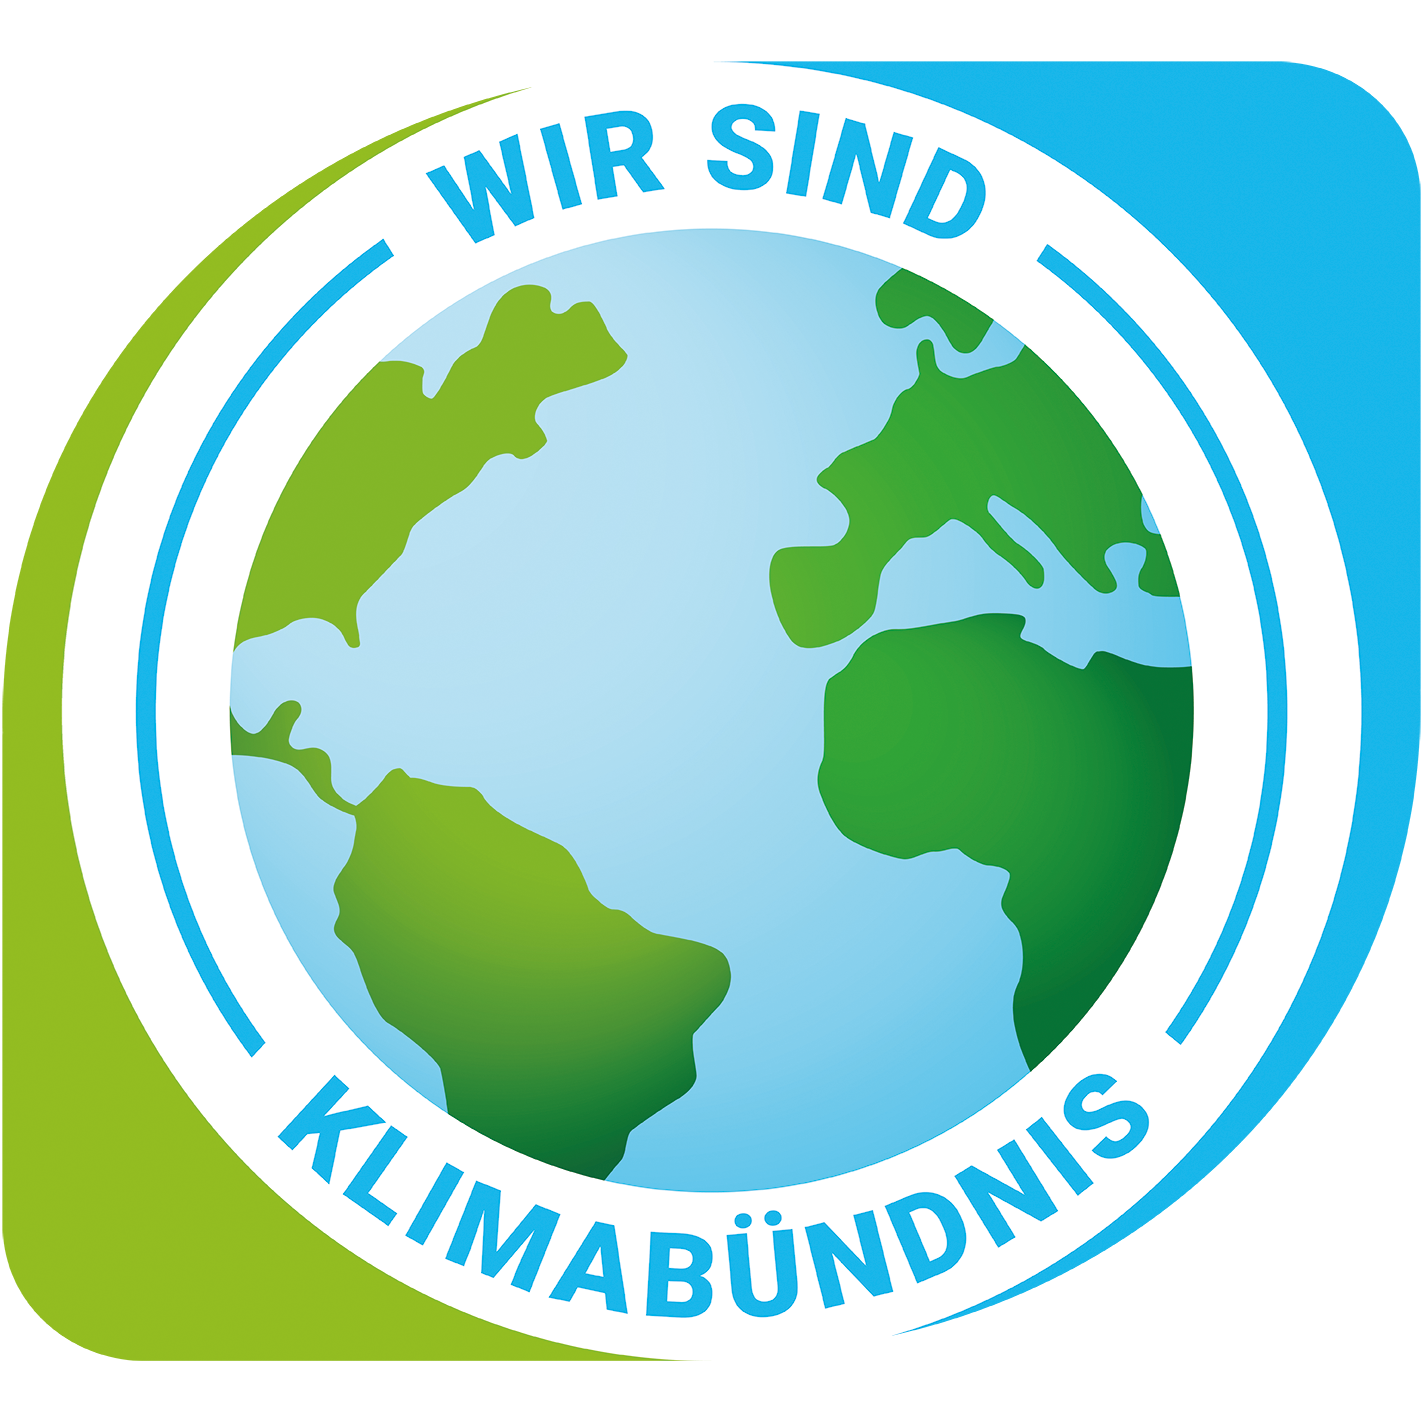 Klimabuendnis logo